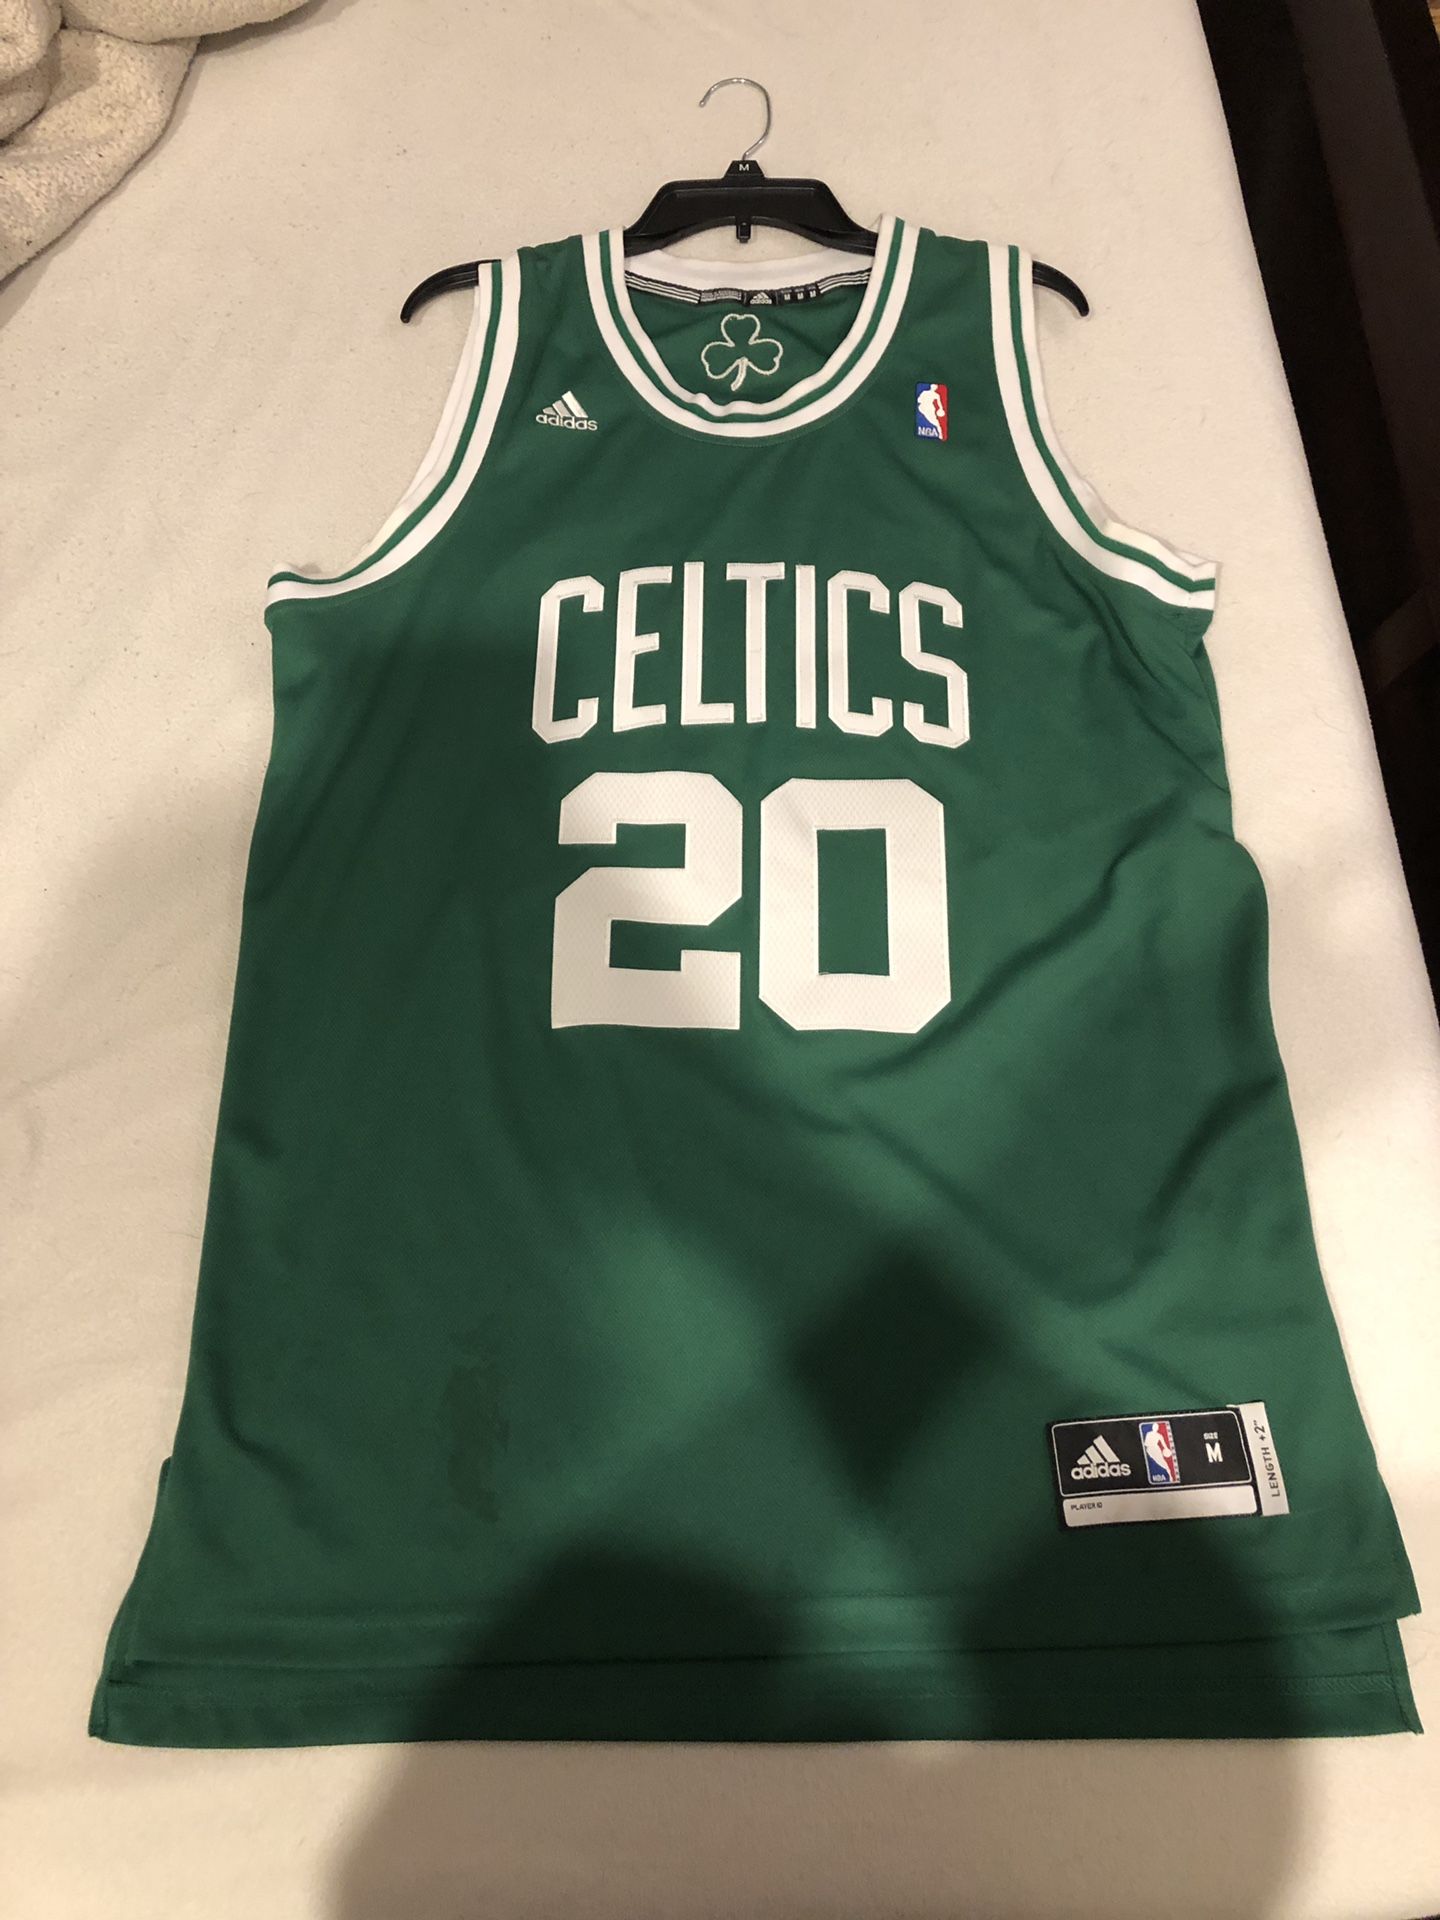 Authentic Ray Allen Celtics Jersey